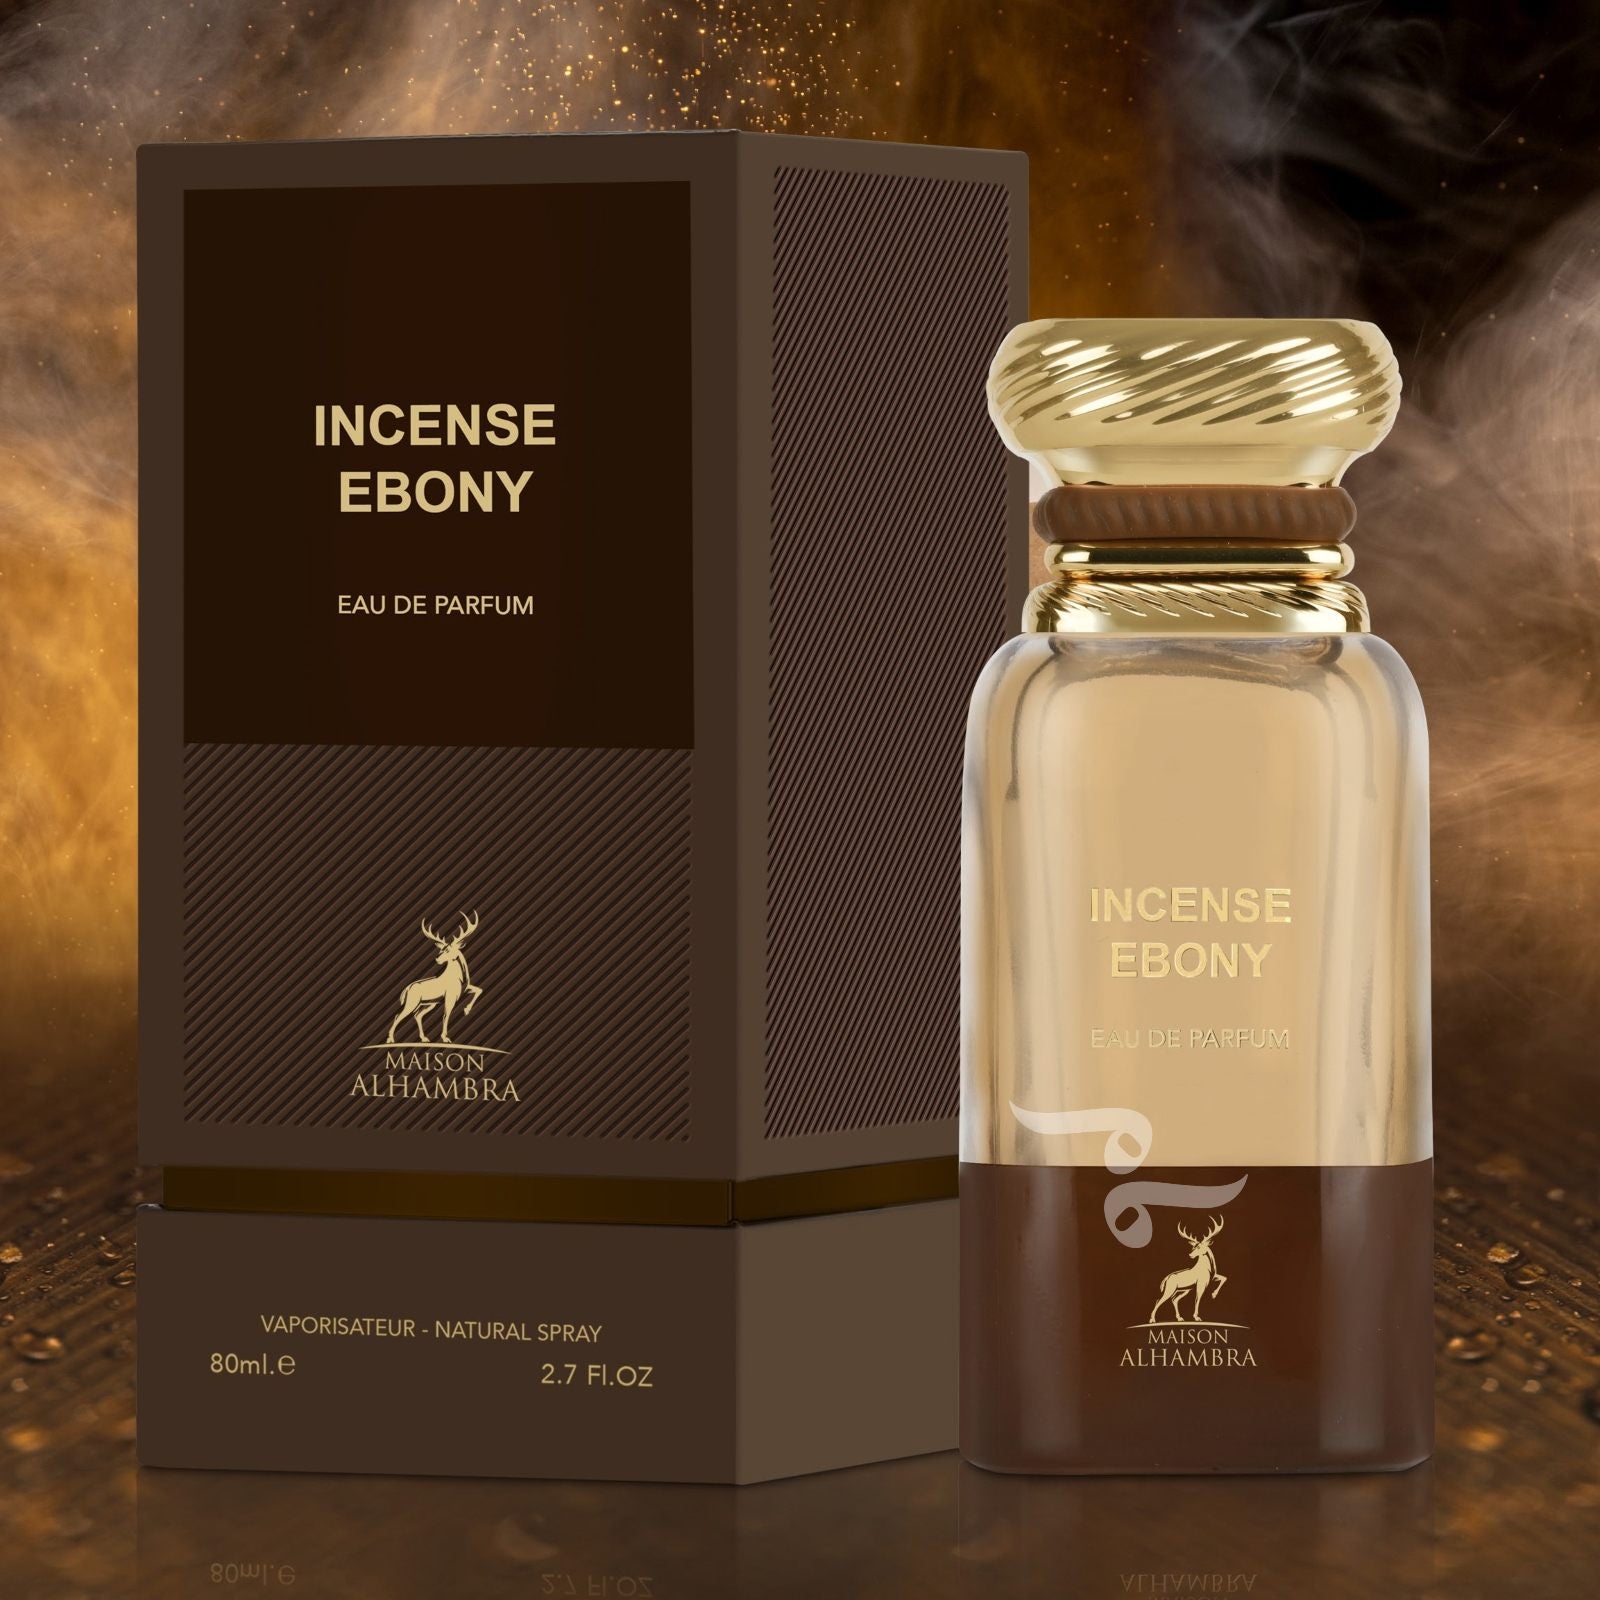 Incense Ebony By Maison Al Hambra